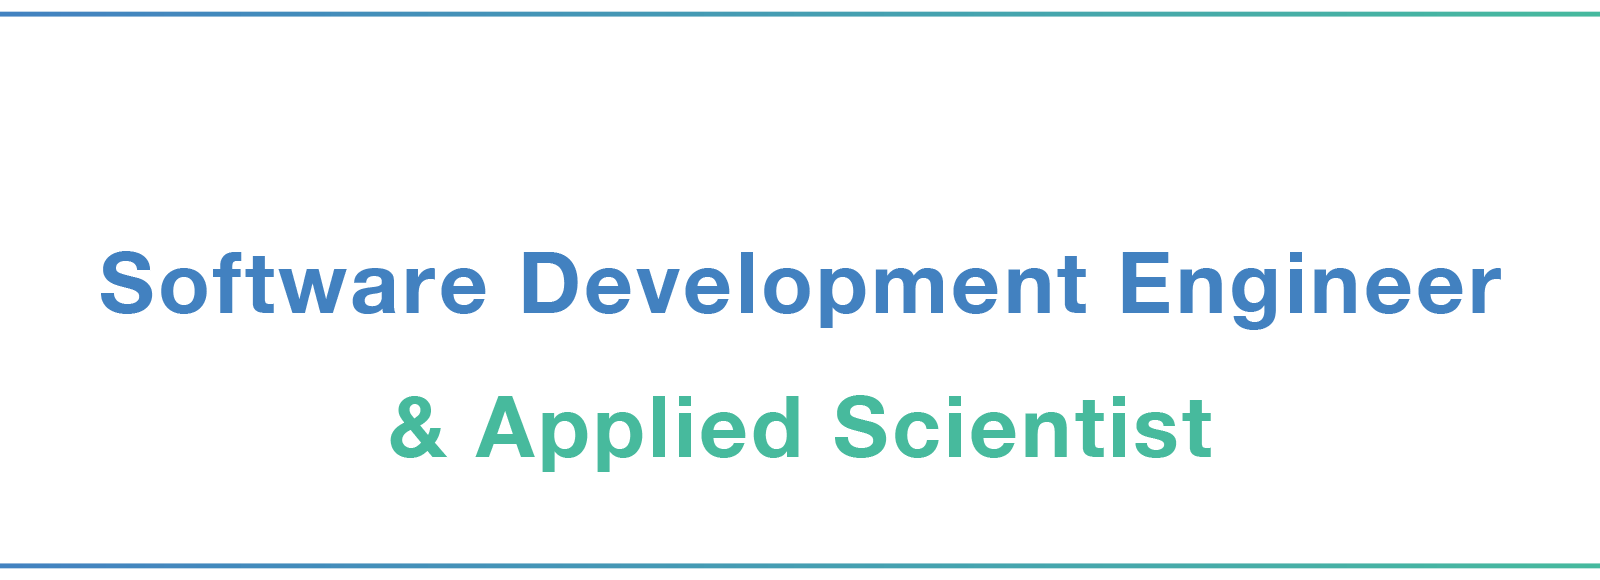 Amazon Japan Tech Talk for Software Development Engineer & Applied Scientist